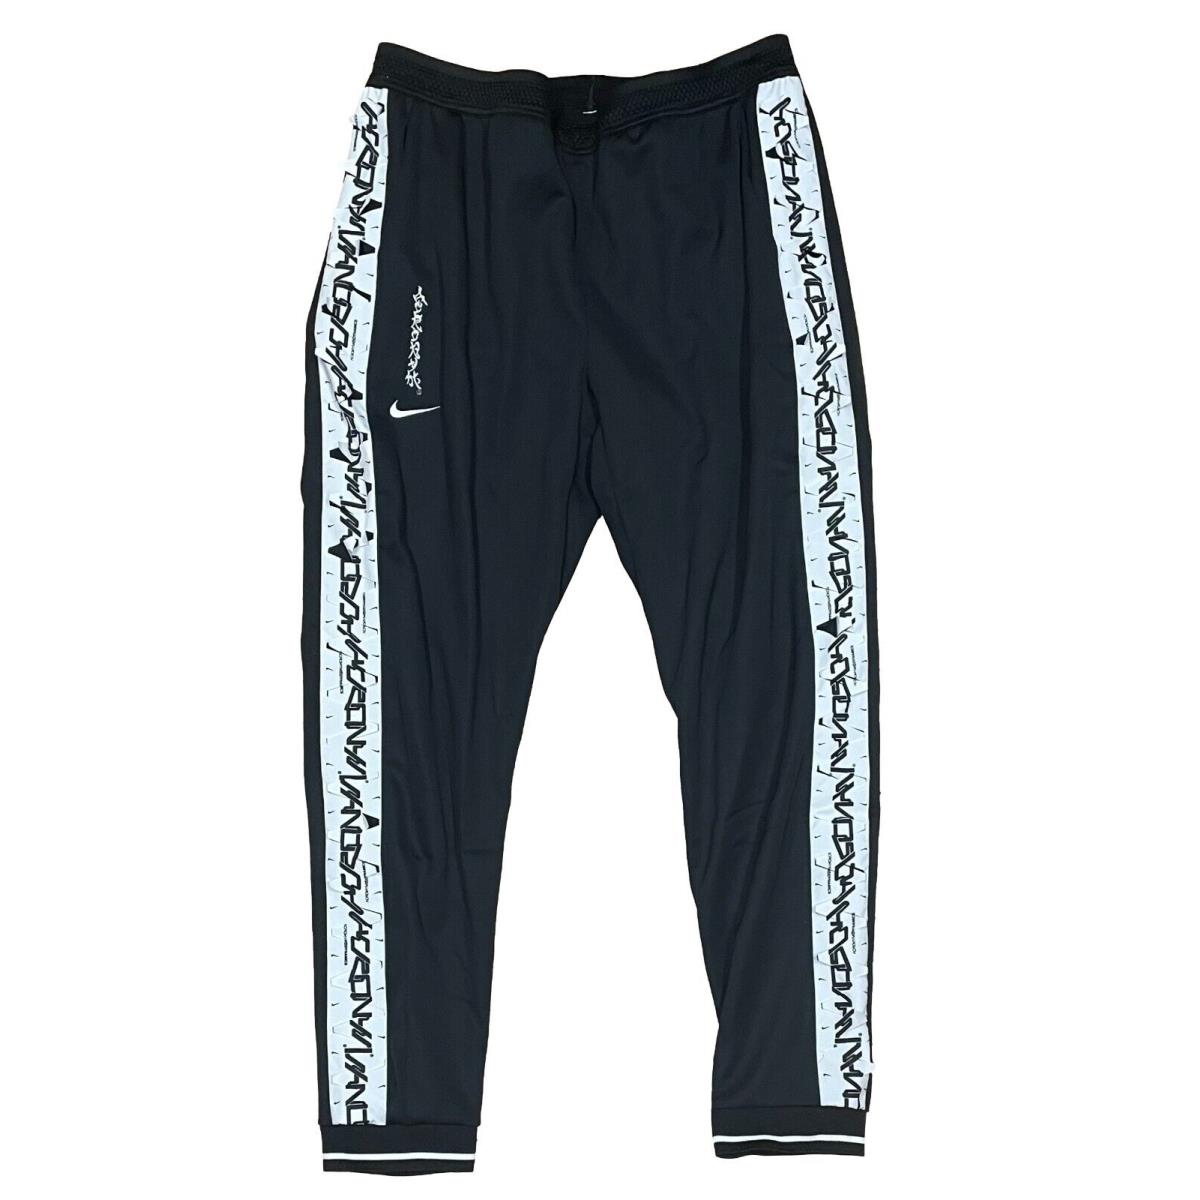 Nike x Acronym Men`s Sweatpants Pants Joggers Size L Large Large - Retail